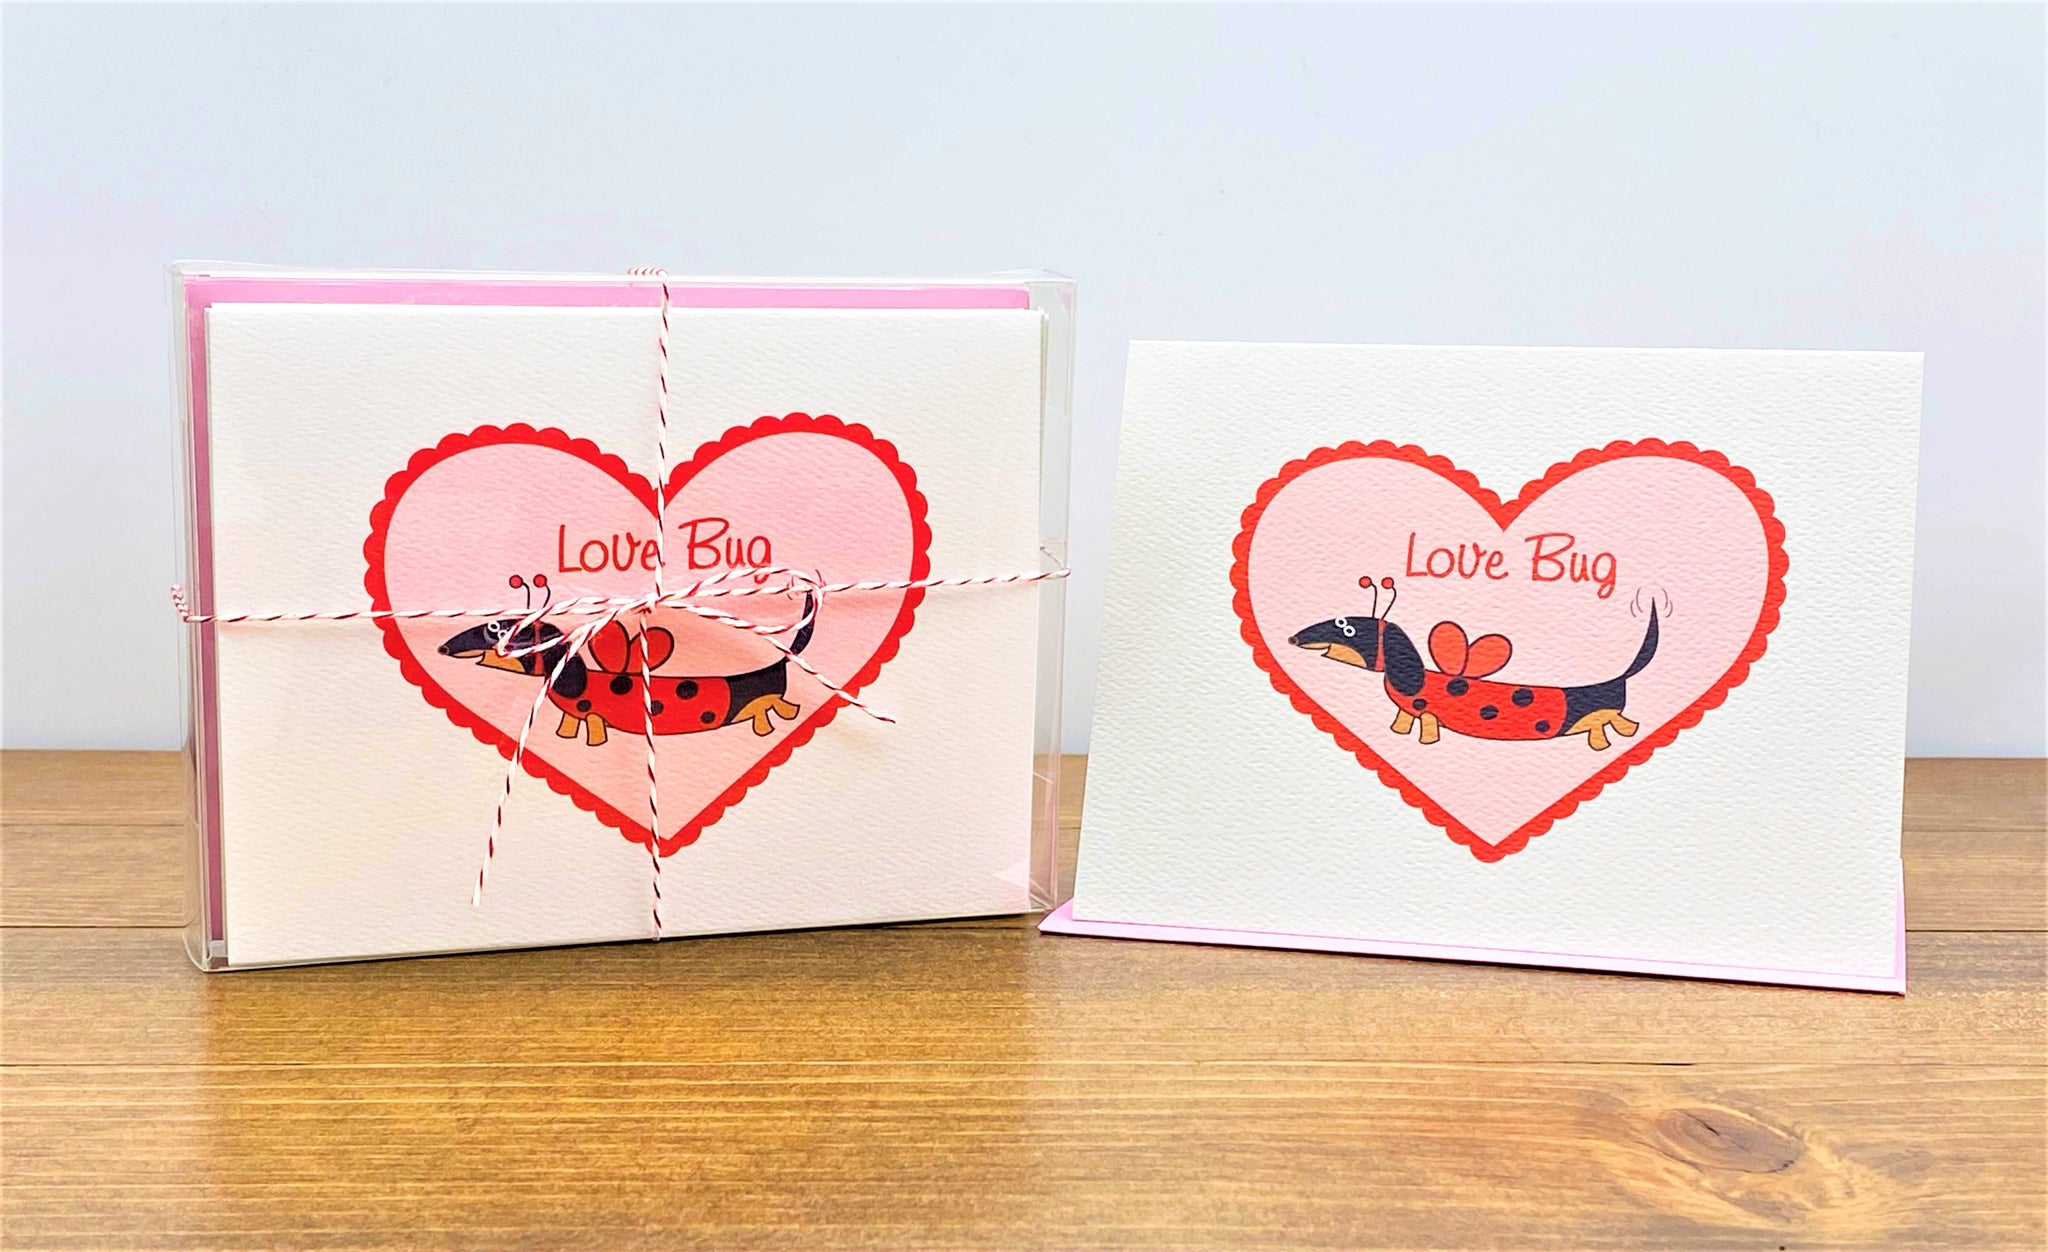 Black and tan dachshund ladybug Valentine's Day Card - Love Bug with Stationery Box